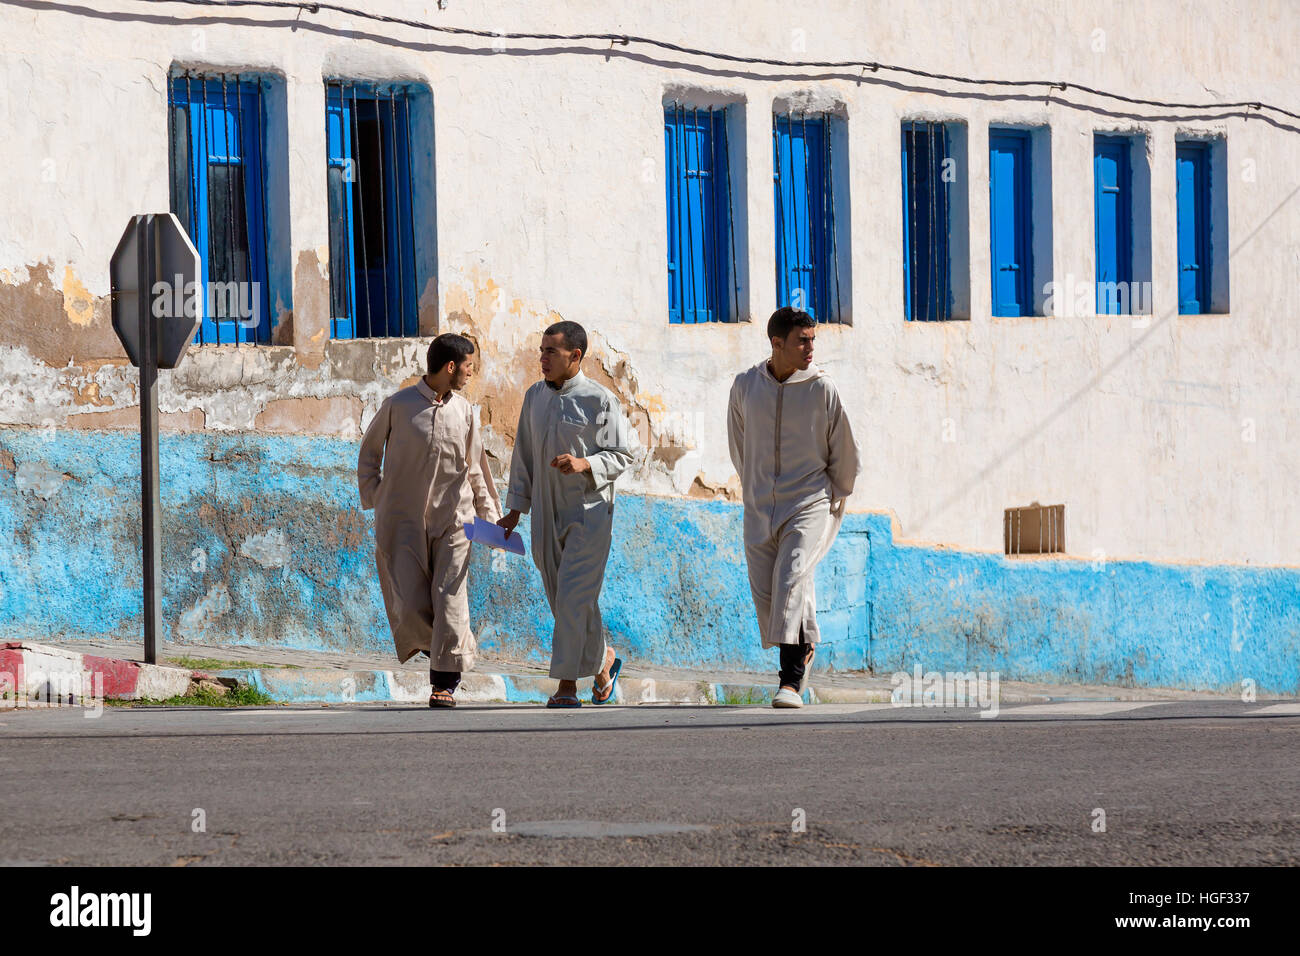 Sidi Ifni, Morocco - November 11, 2016: Scenes full of colors in Moroccan streets. Southwestern Morocco. Stock Photo